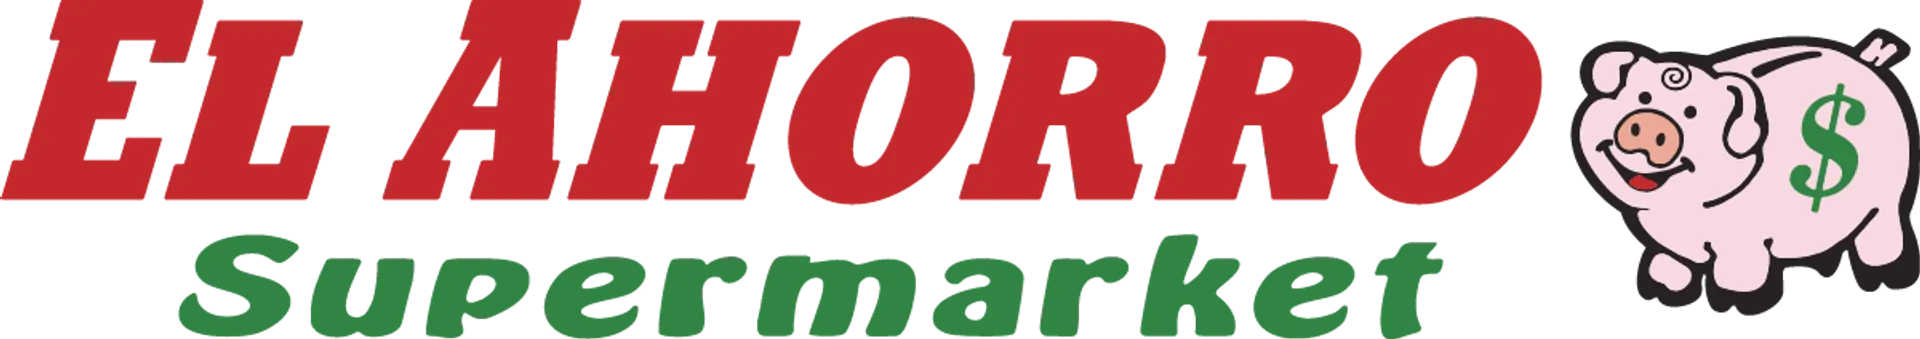 EL AHORRO SUPERMARKET logo. Current weekly ad